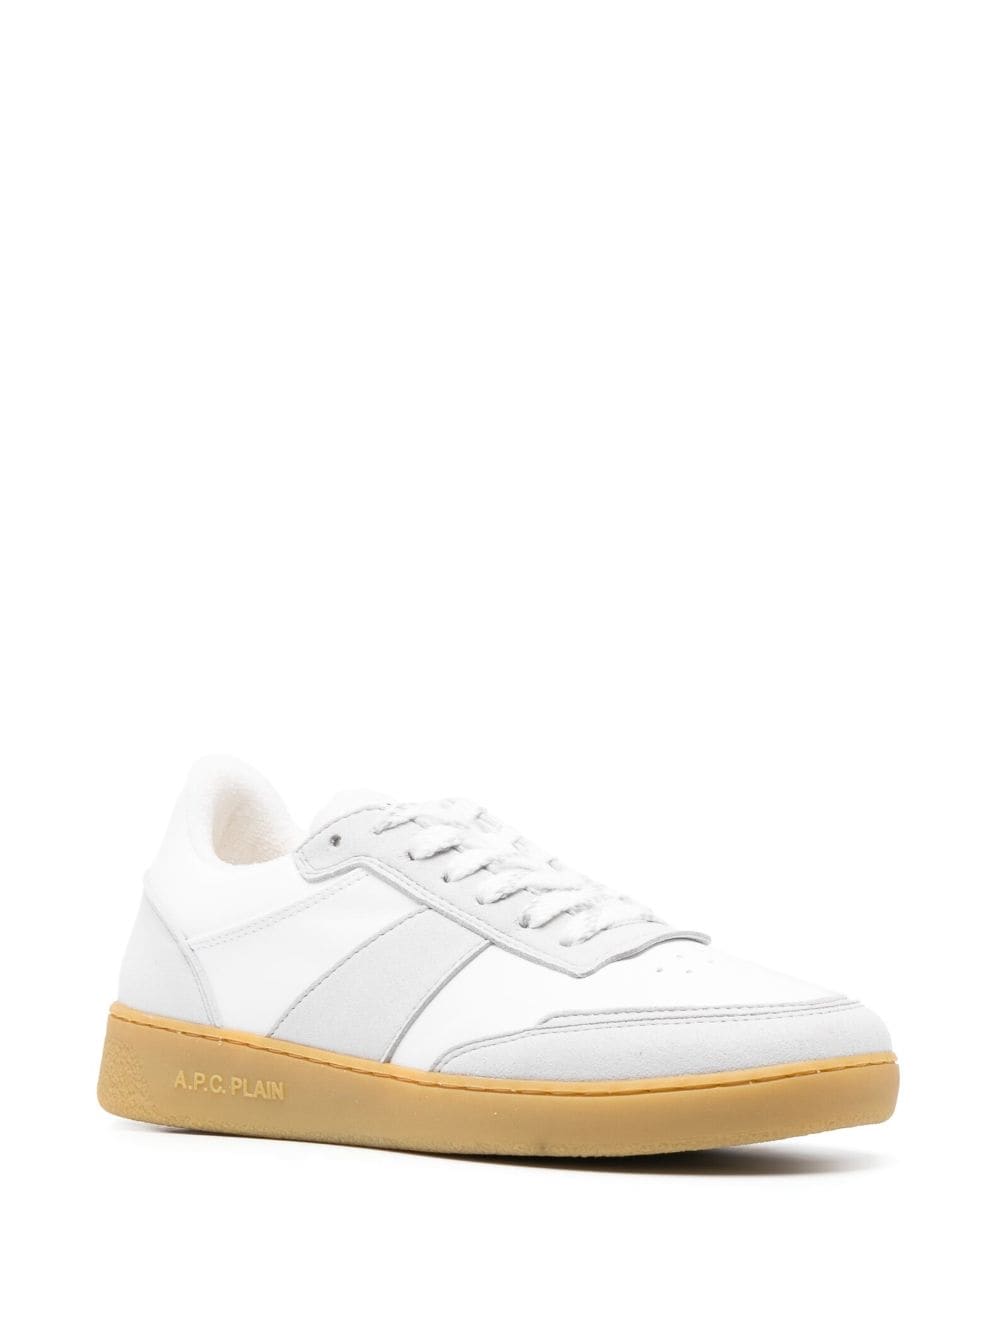 Shop Apc Plain Low-top Sneakers In White